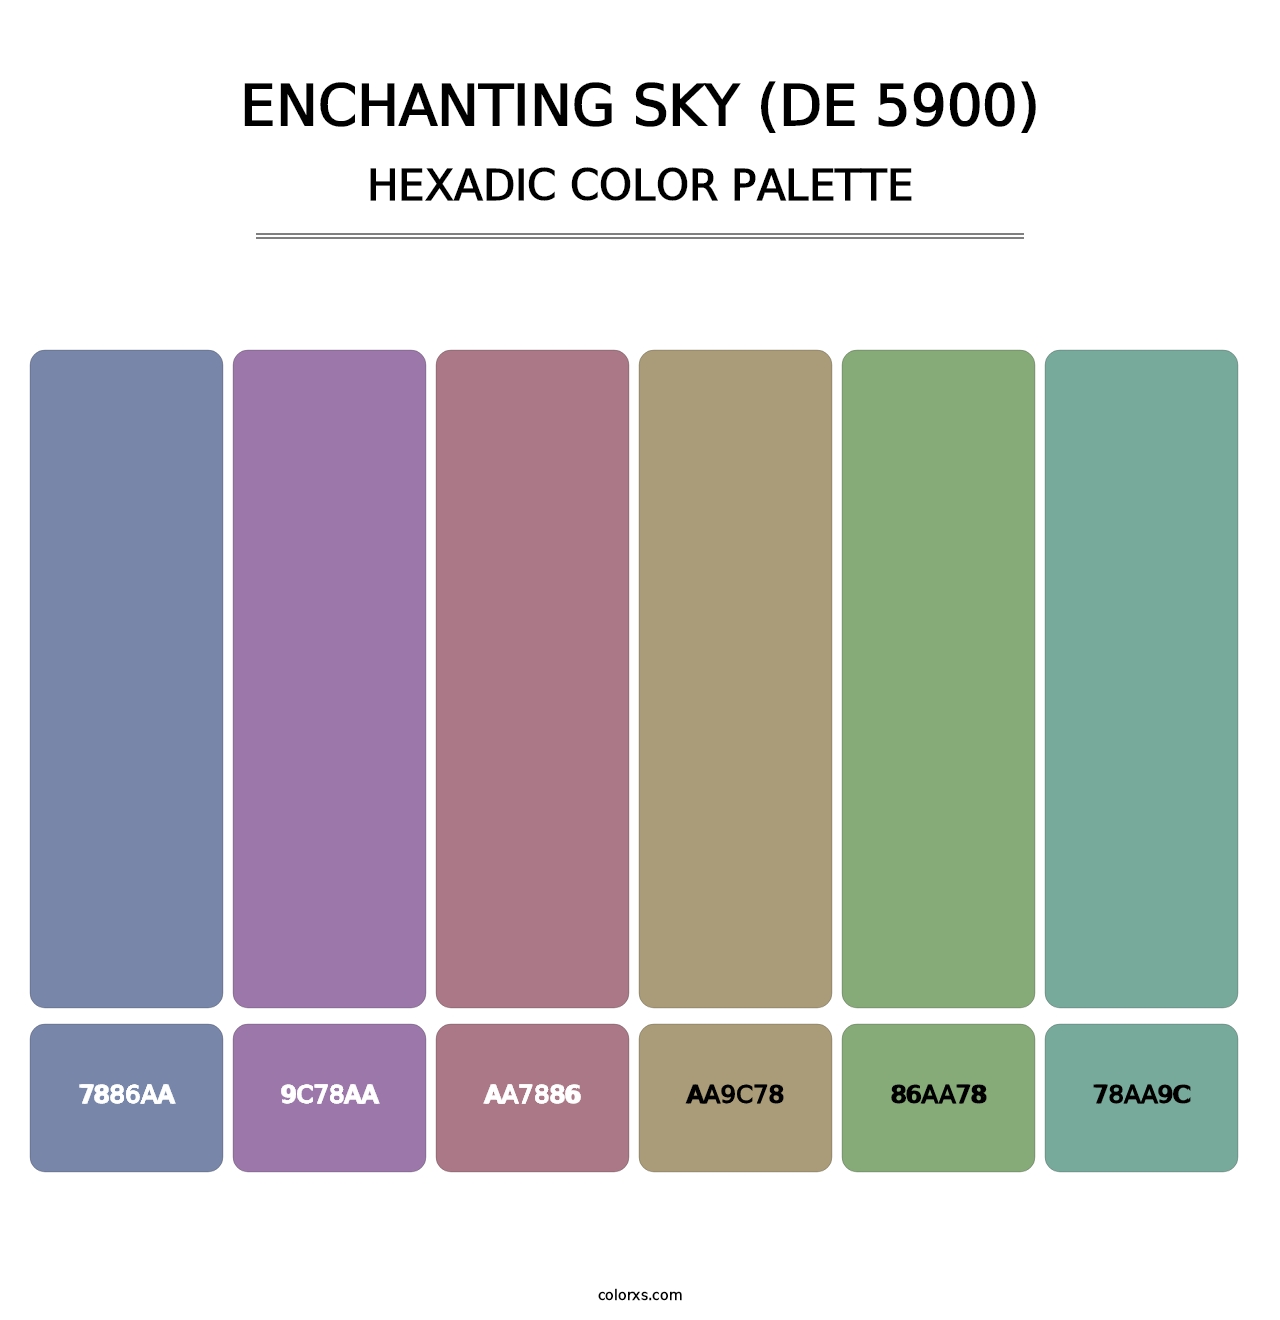 Enchanting Sky (DE 5900) - Hexadic Color Palette